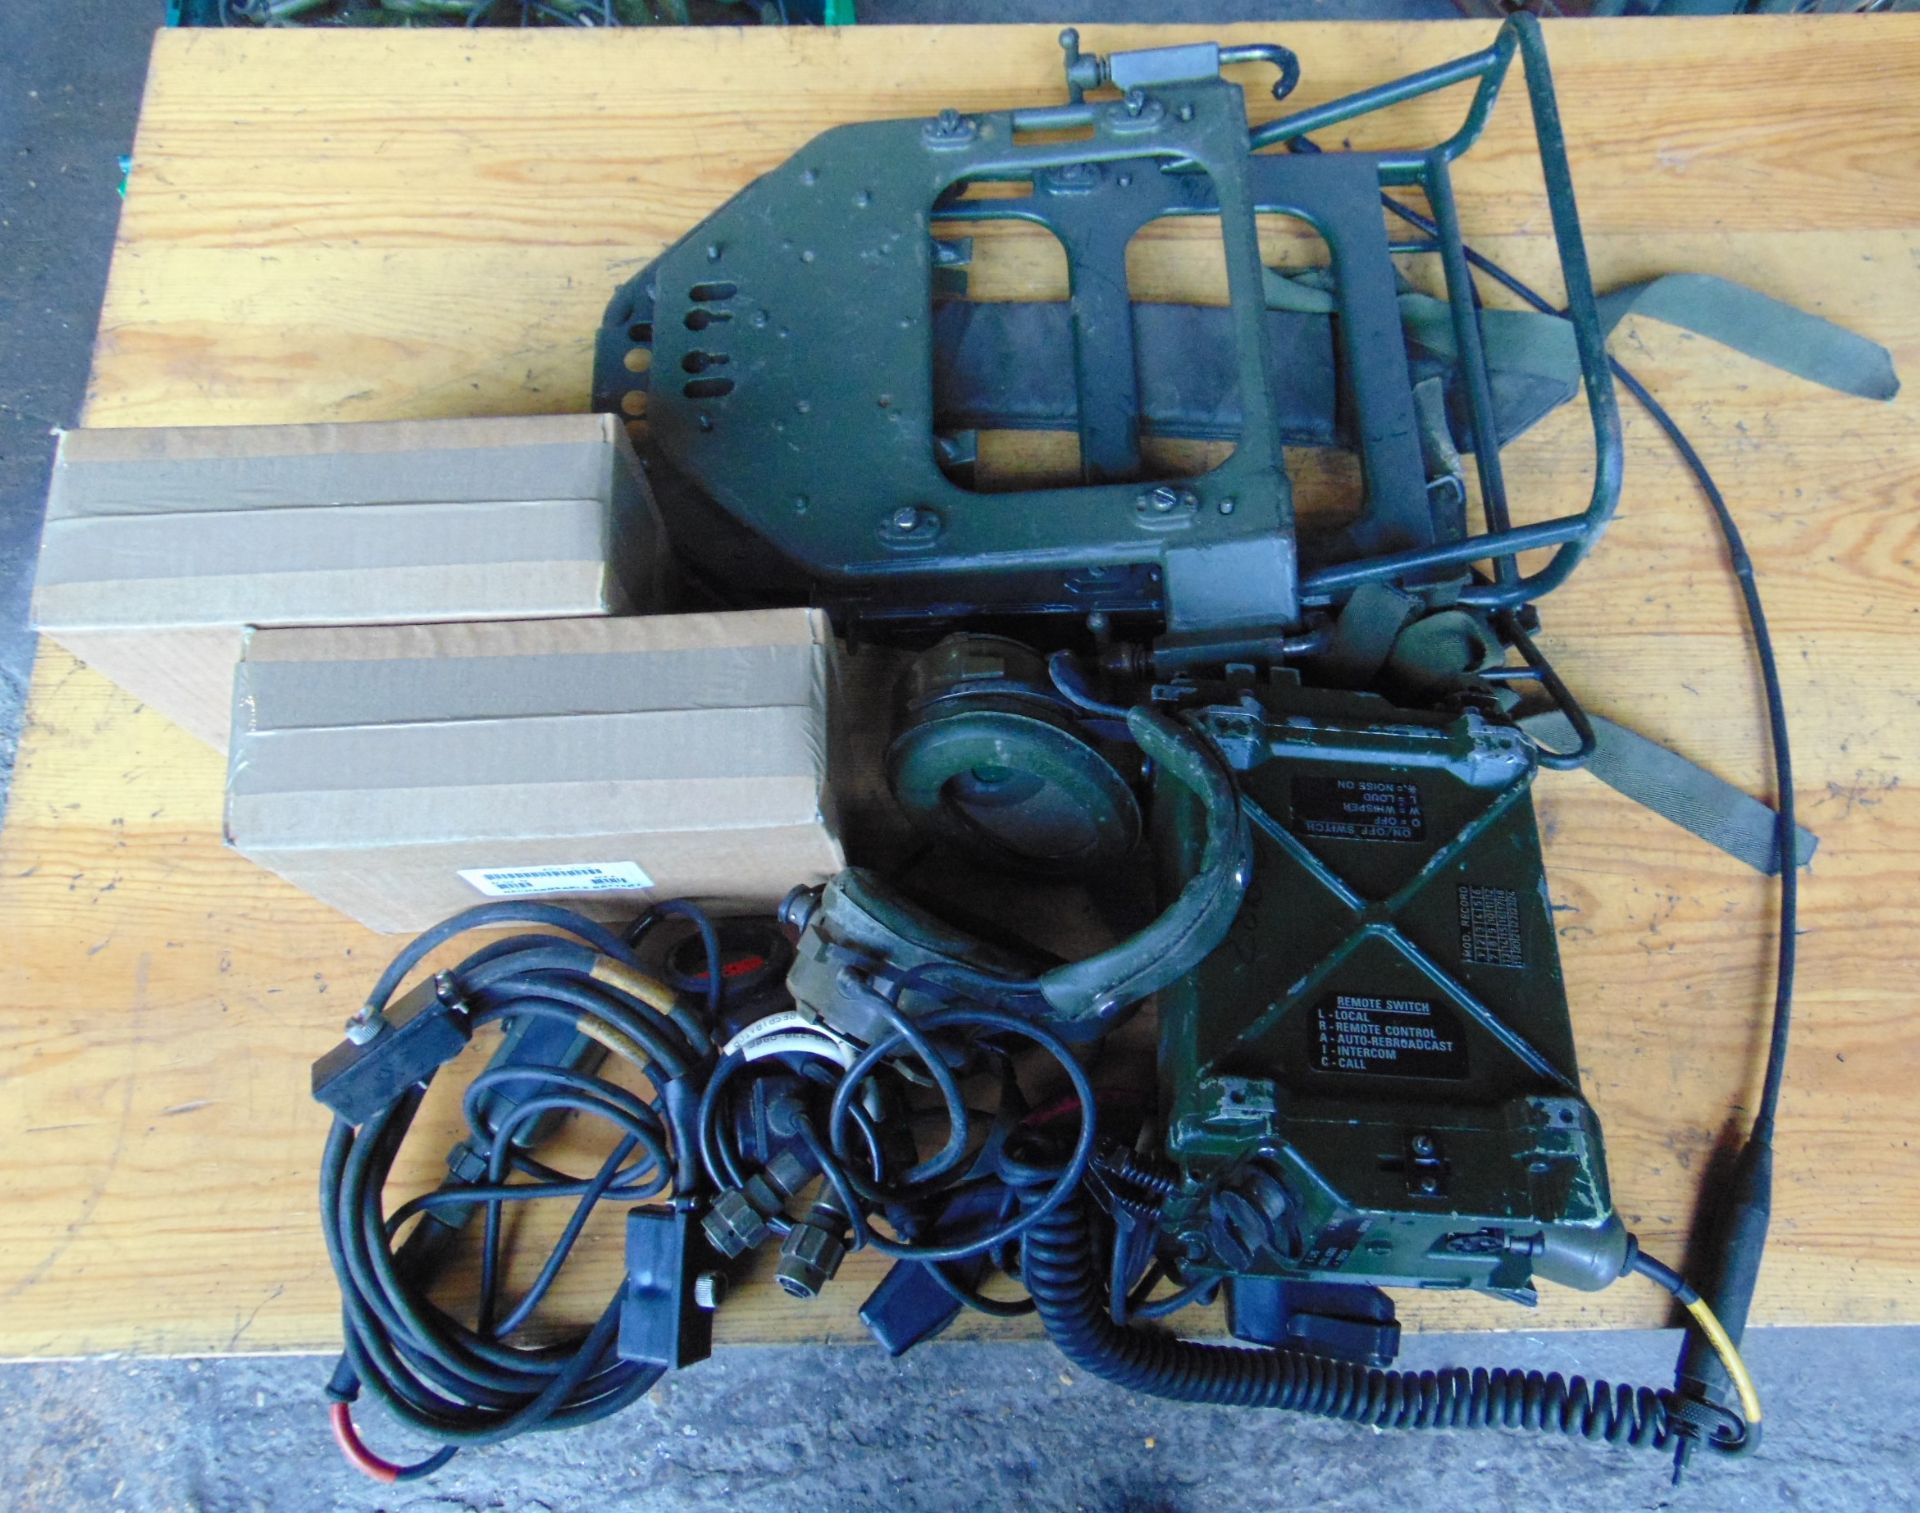 Clansman UKRT 351 Transmitter receiver C/W 2 New Batteries & Kit as shown - Image 2 of 7